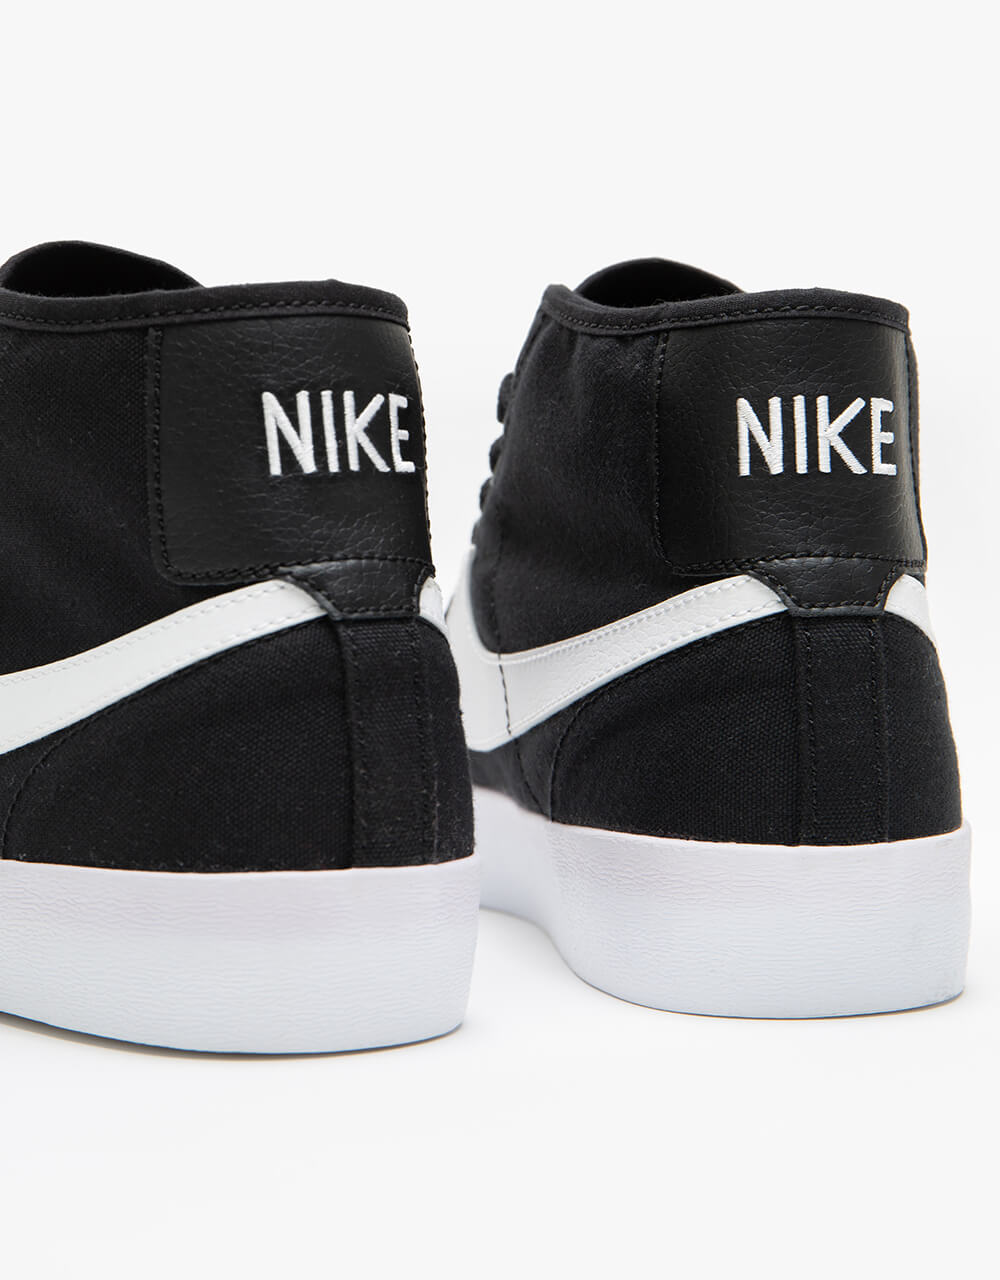 Nike SB BLZR Court Mid Skate Shoes - Black/White-Black